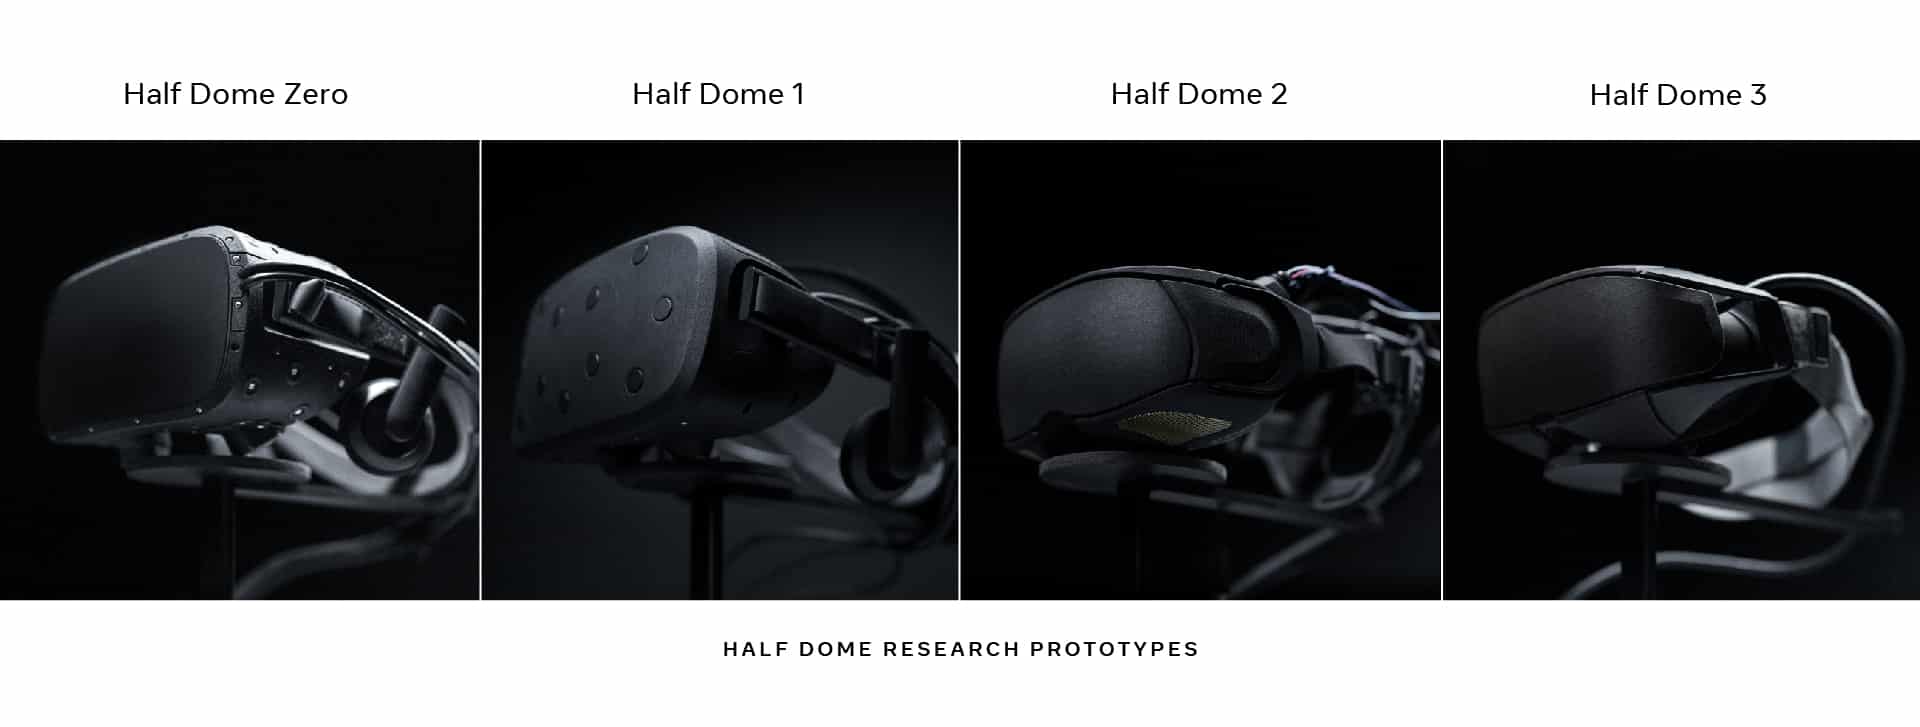 Les différents prototypes de l'Half Dome